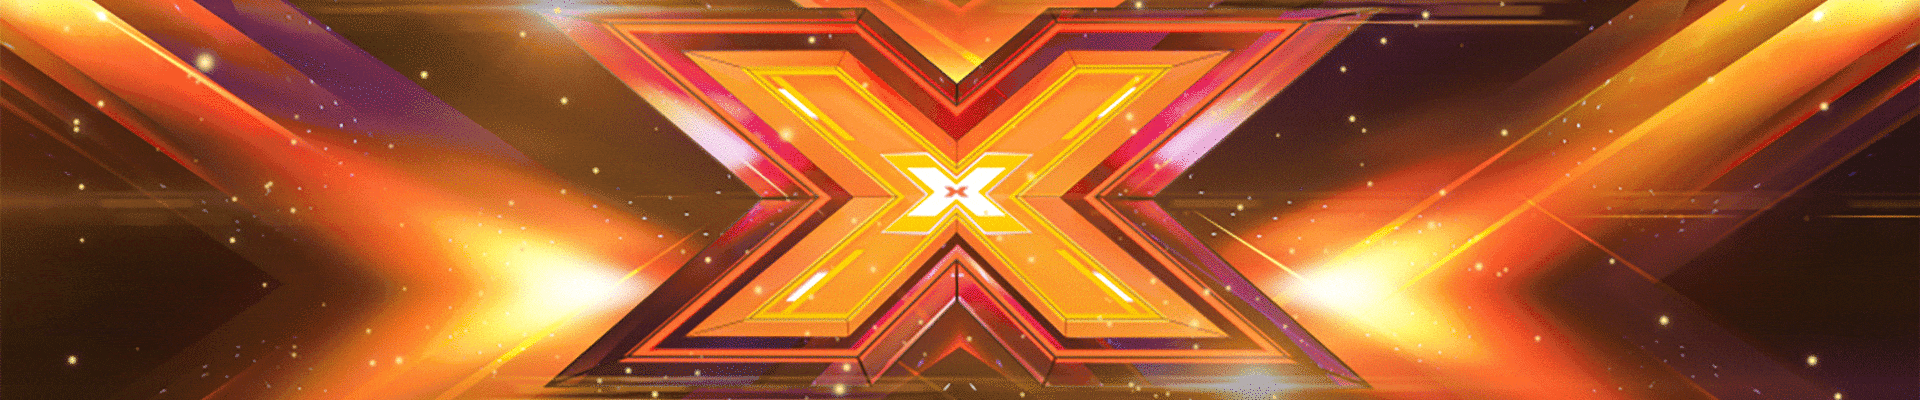 X-Factor_1920x300